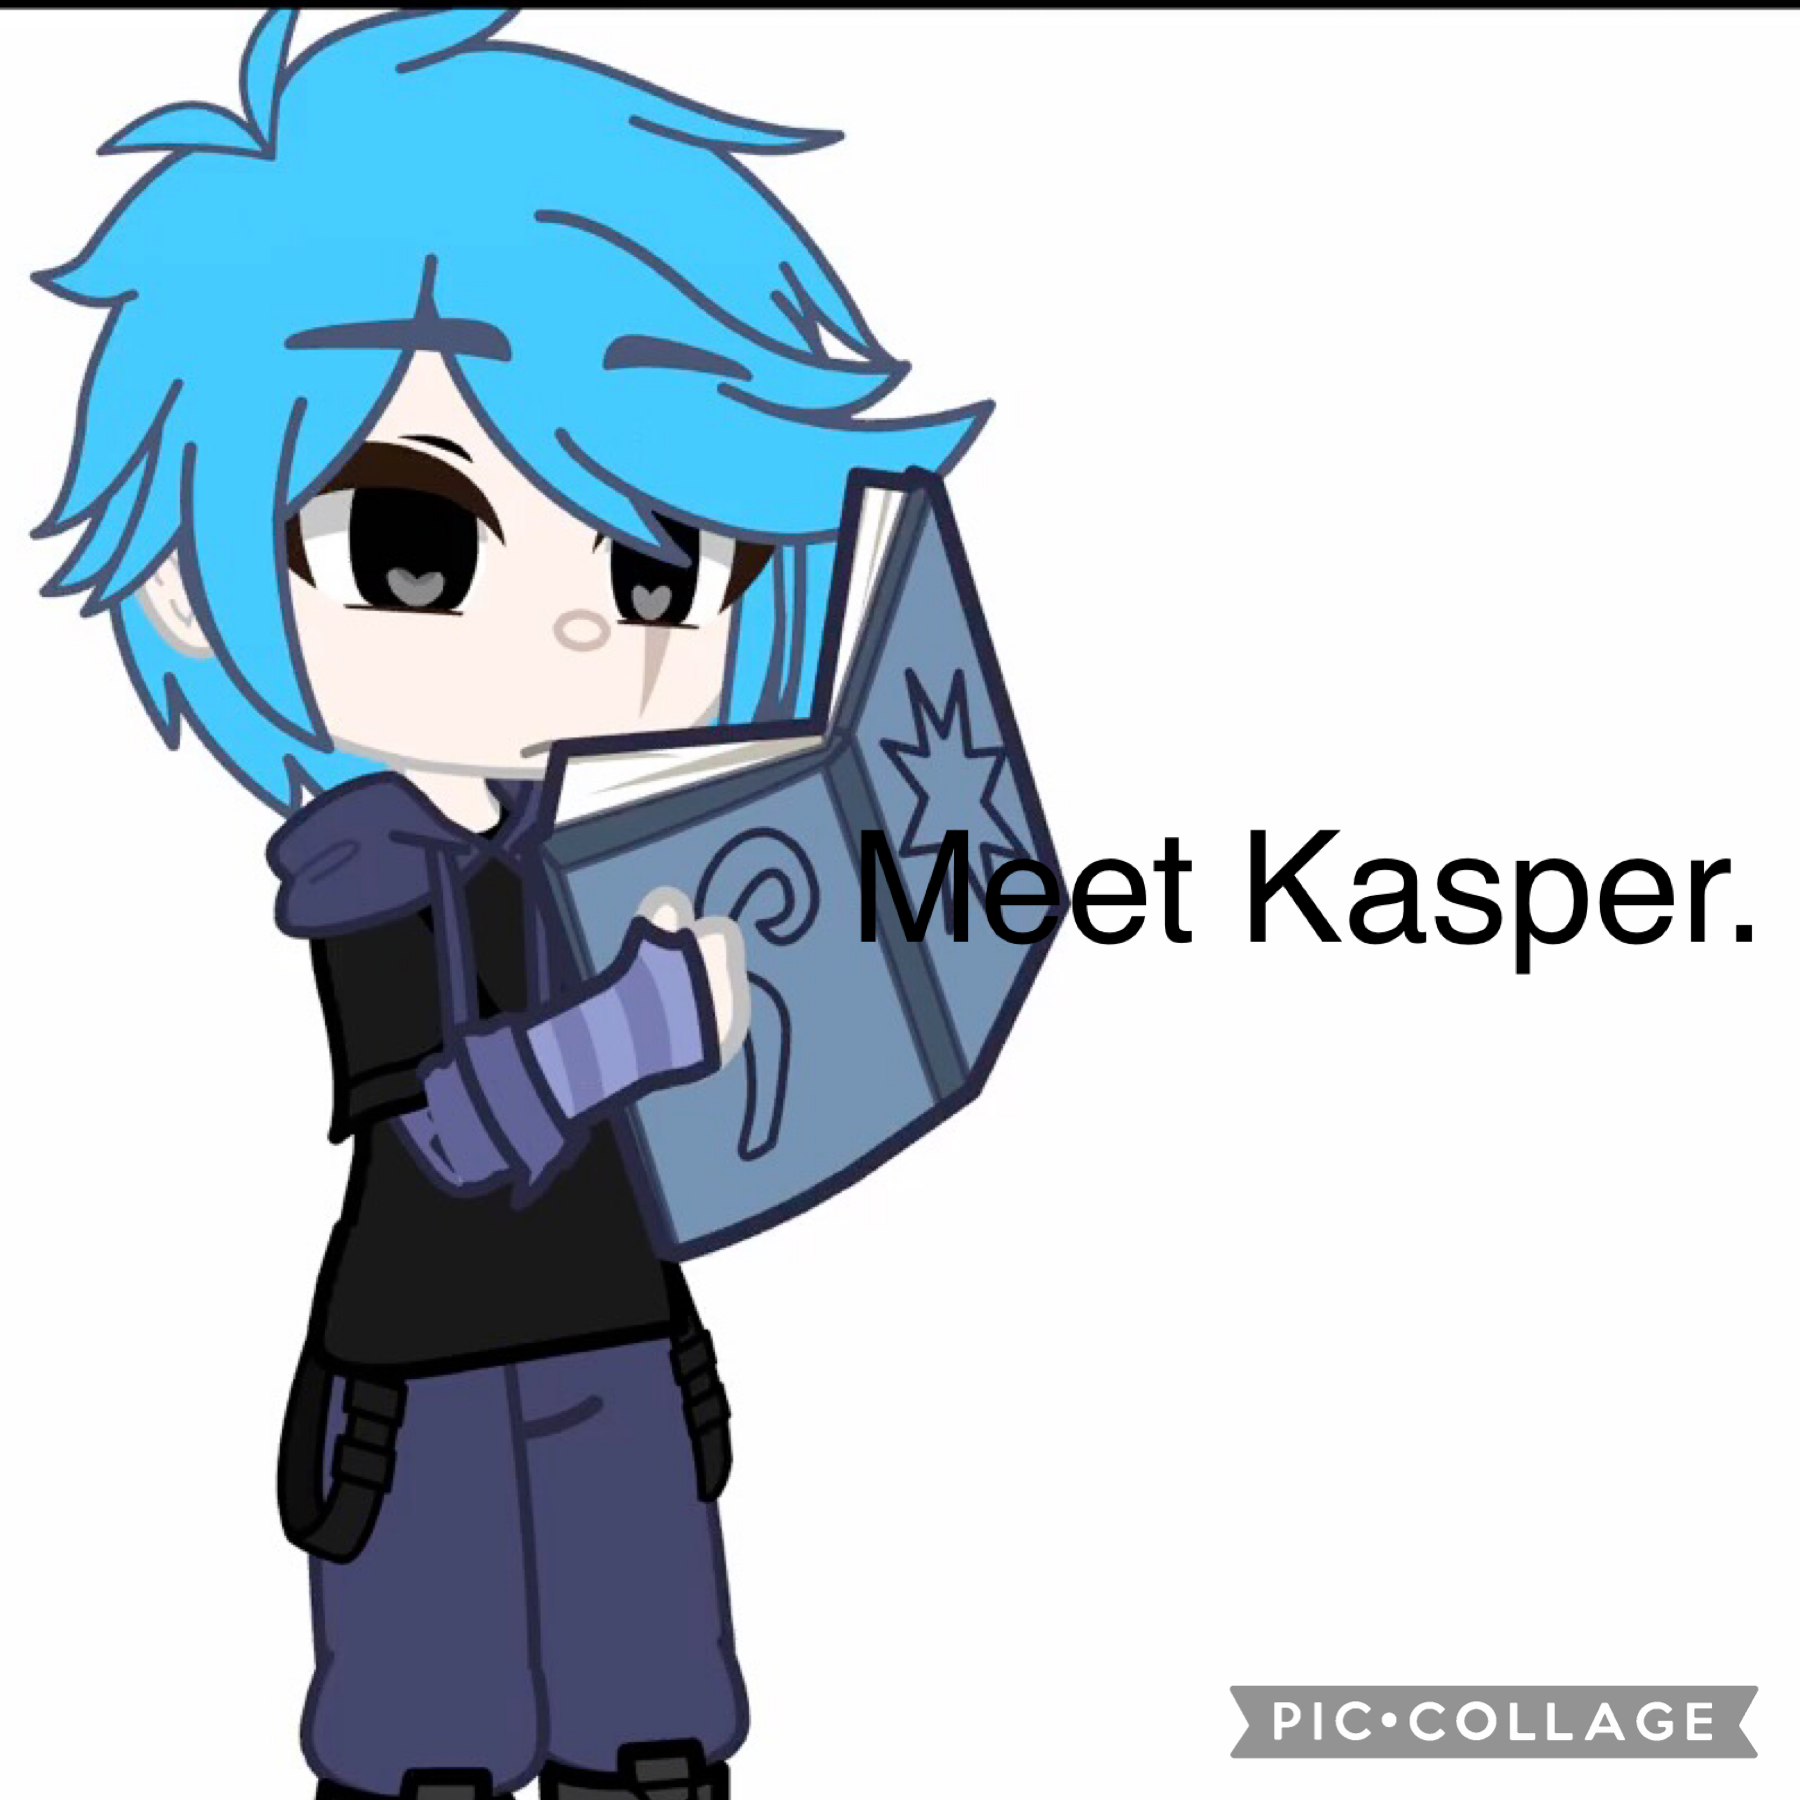 Meet kasper